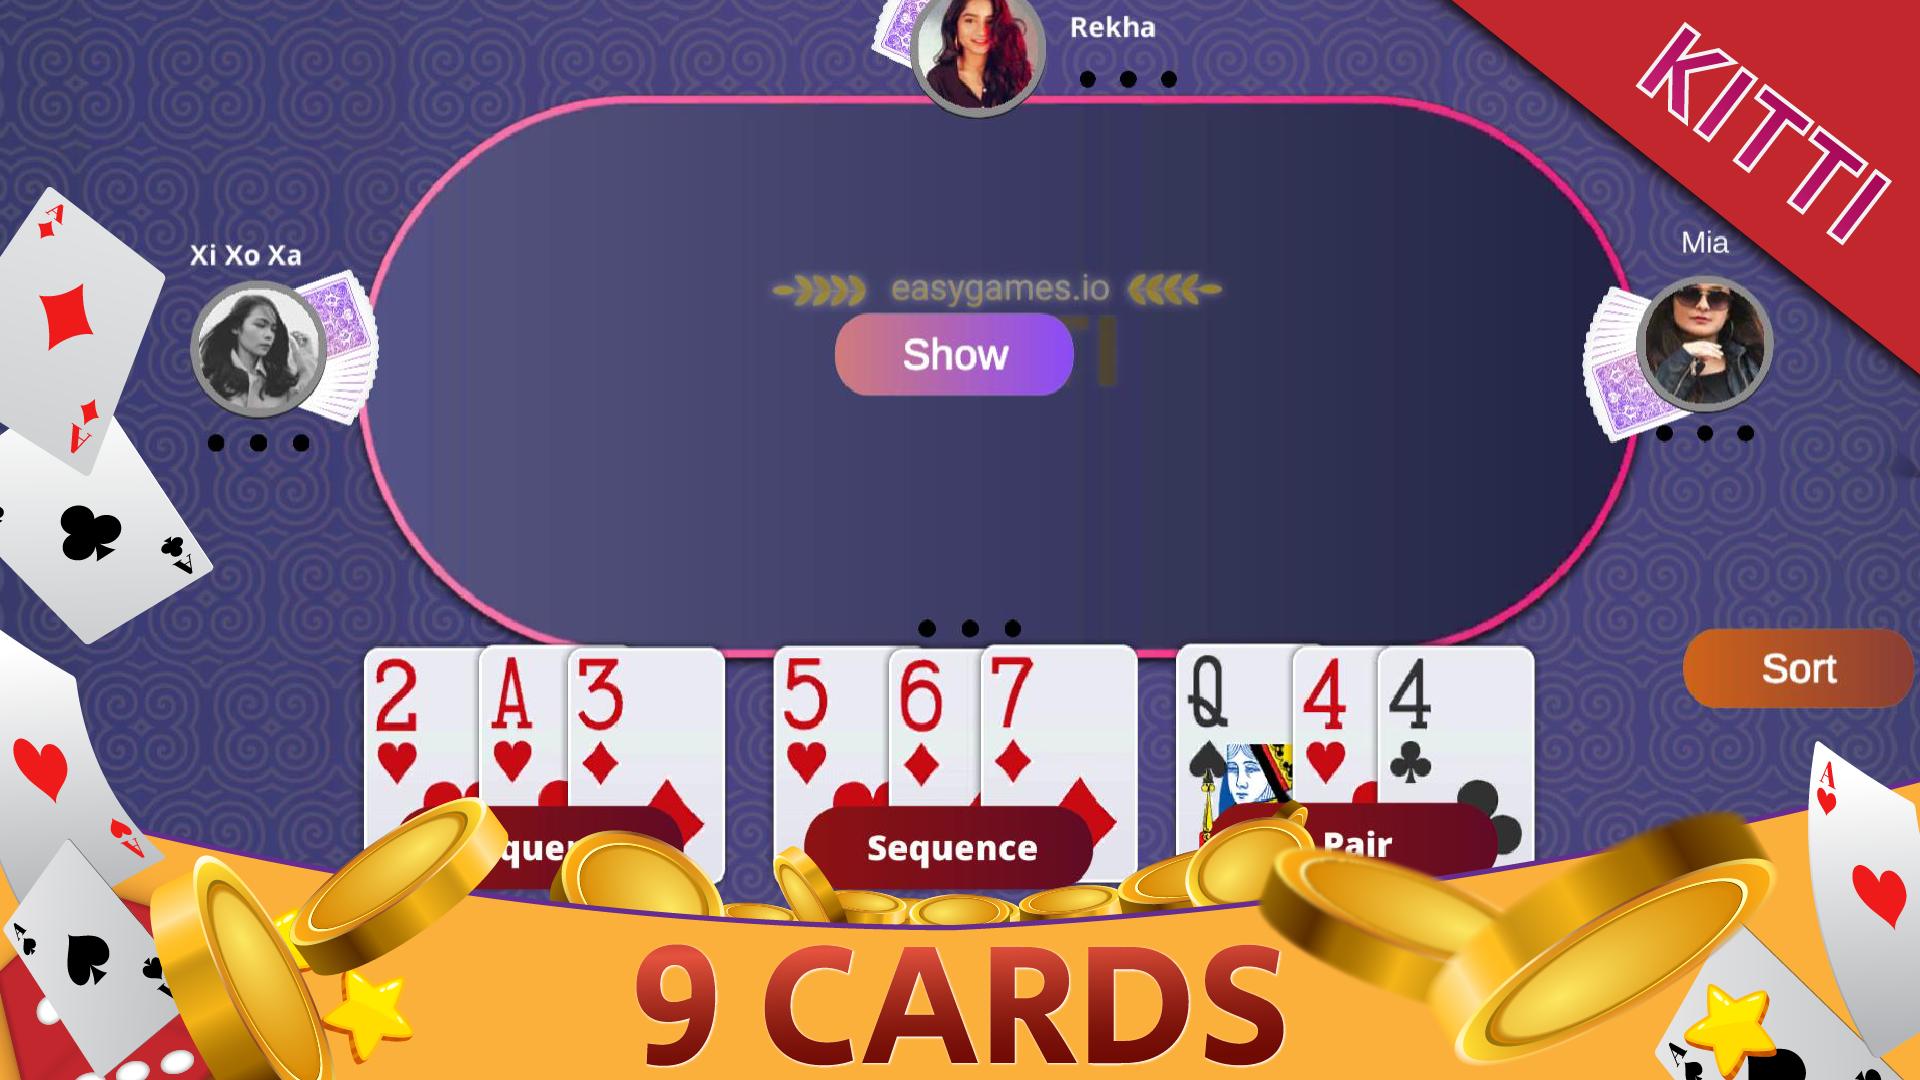 Callbreak, Ludo, Rummy & 9 Card Game -Easygames.io 20210120 Screenshot 10